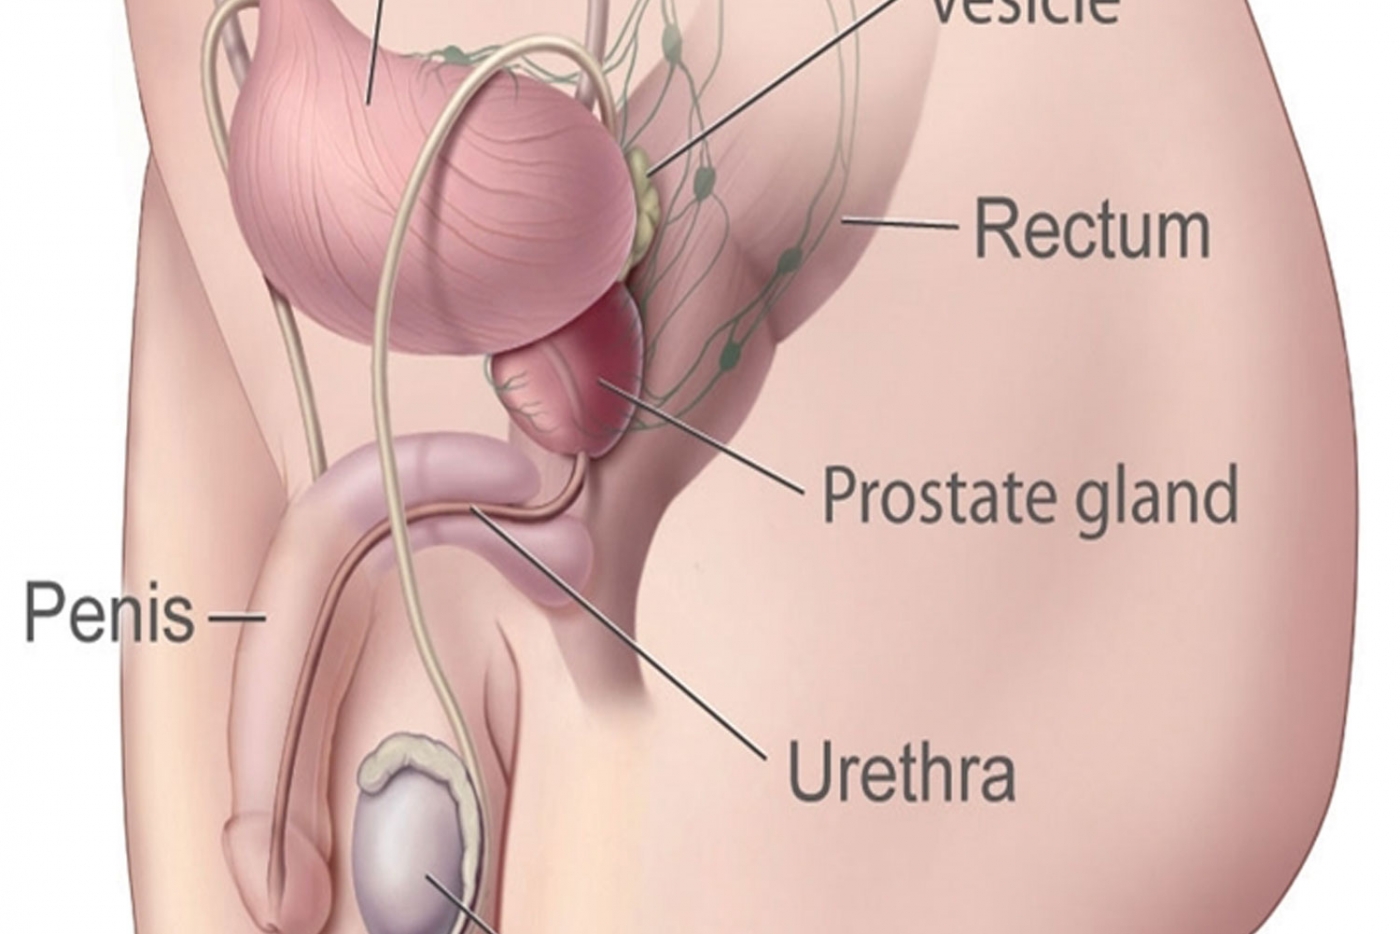 Prostatite cronica: la via crucis medico-paziente